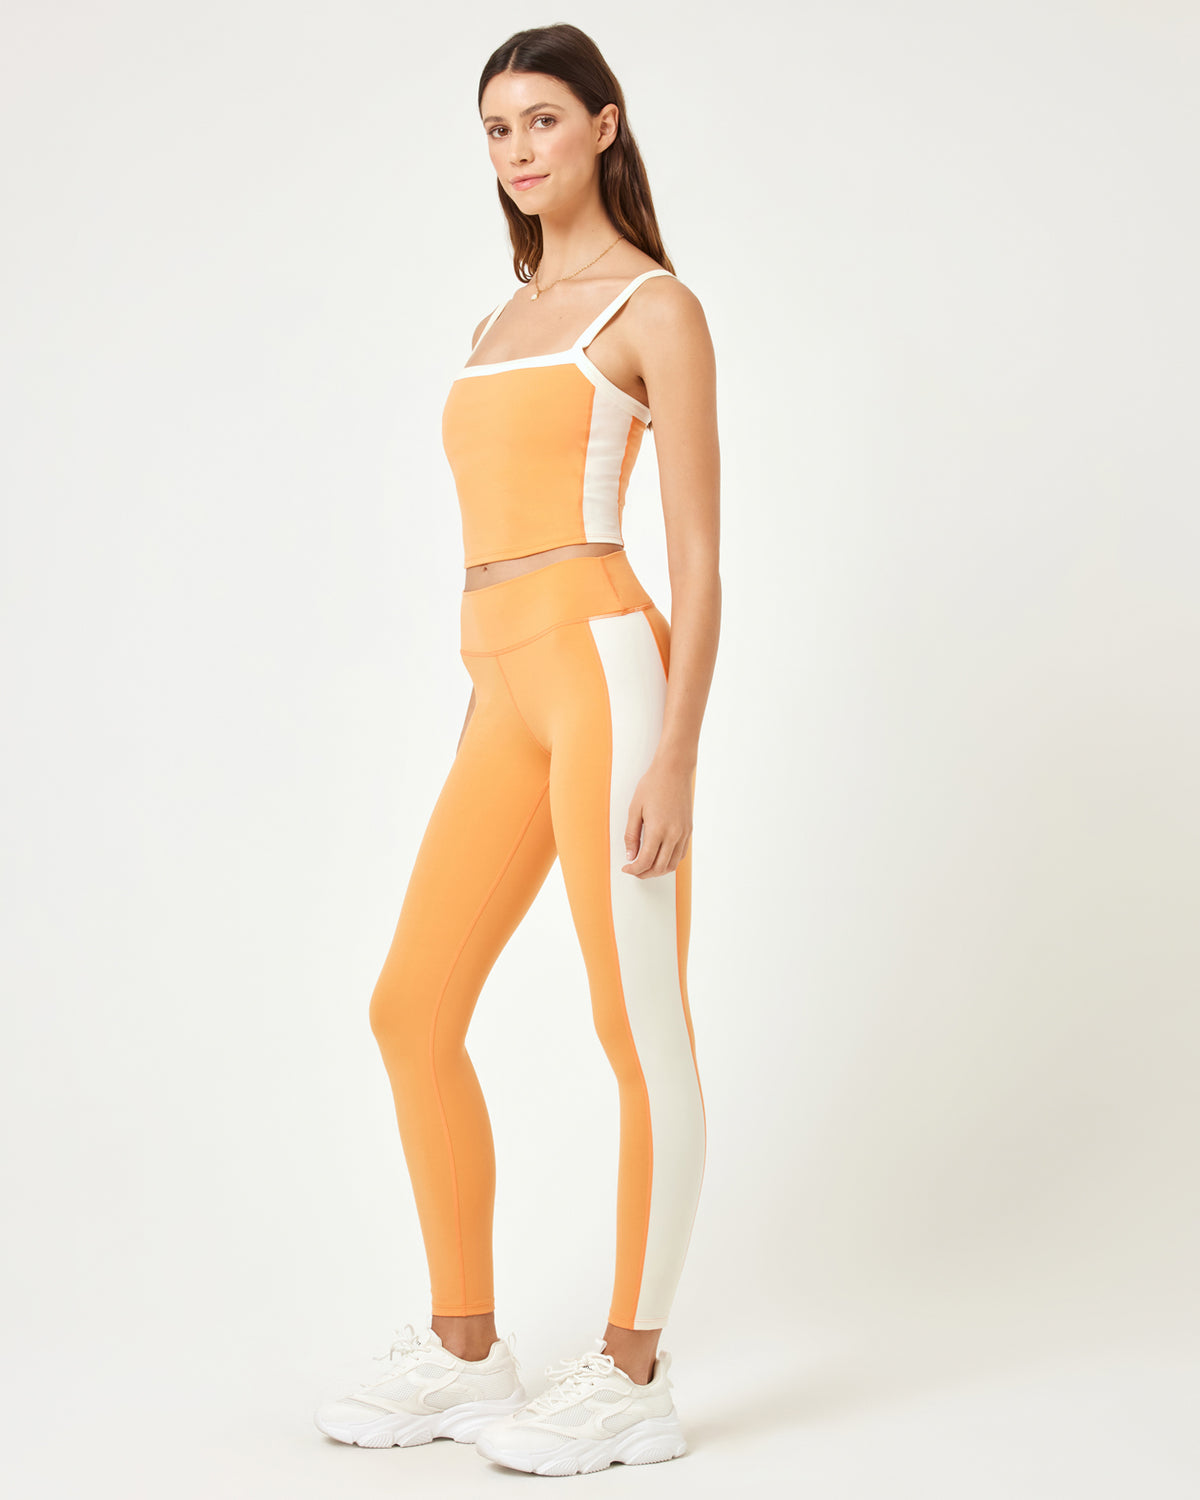 Sidelines Legging - Bellini Bellini | Model: Kristen (size: S)